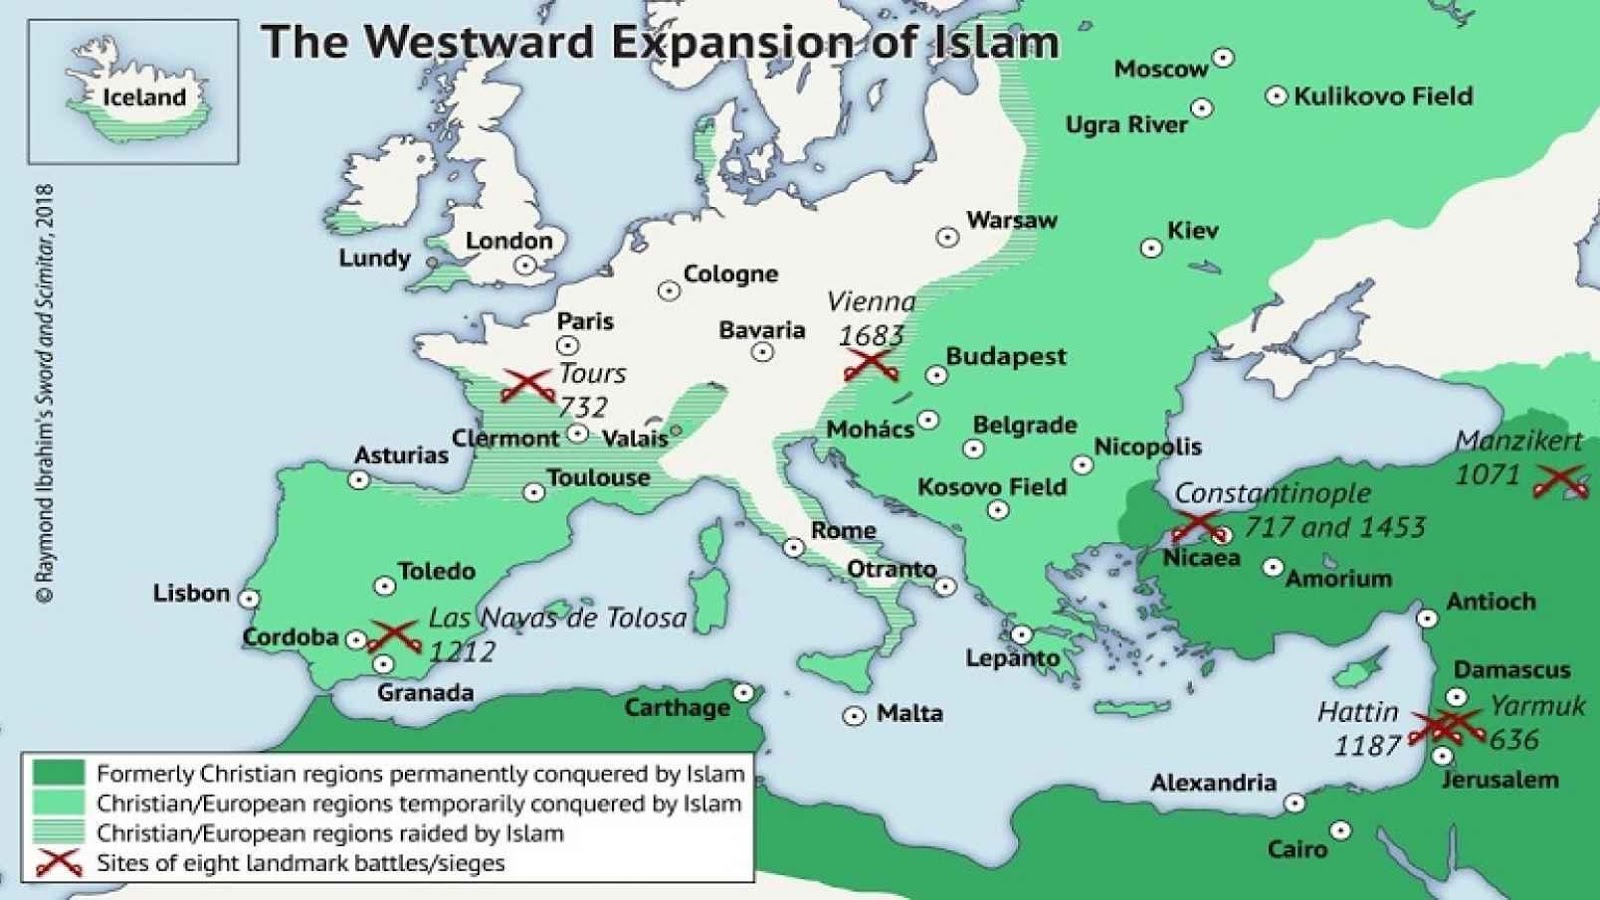 F:\My Documents\Peter\Islam\Kennis LAU\westward_expansion_of_islam.jpg